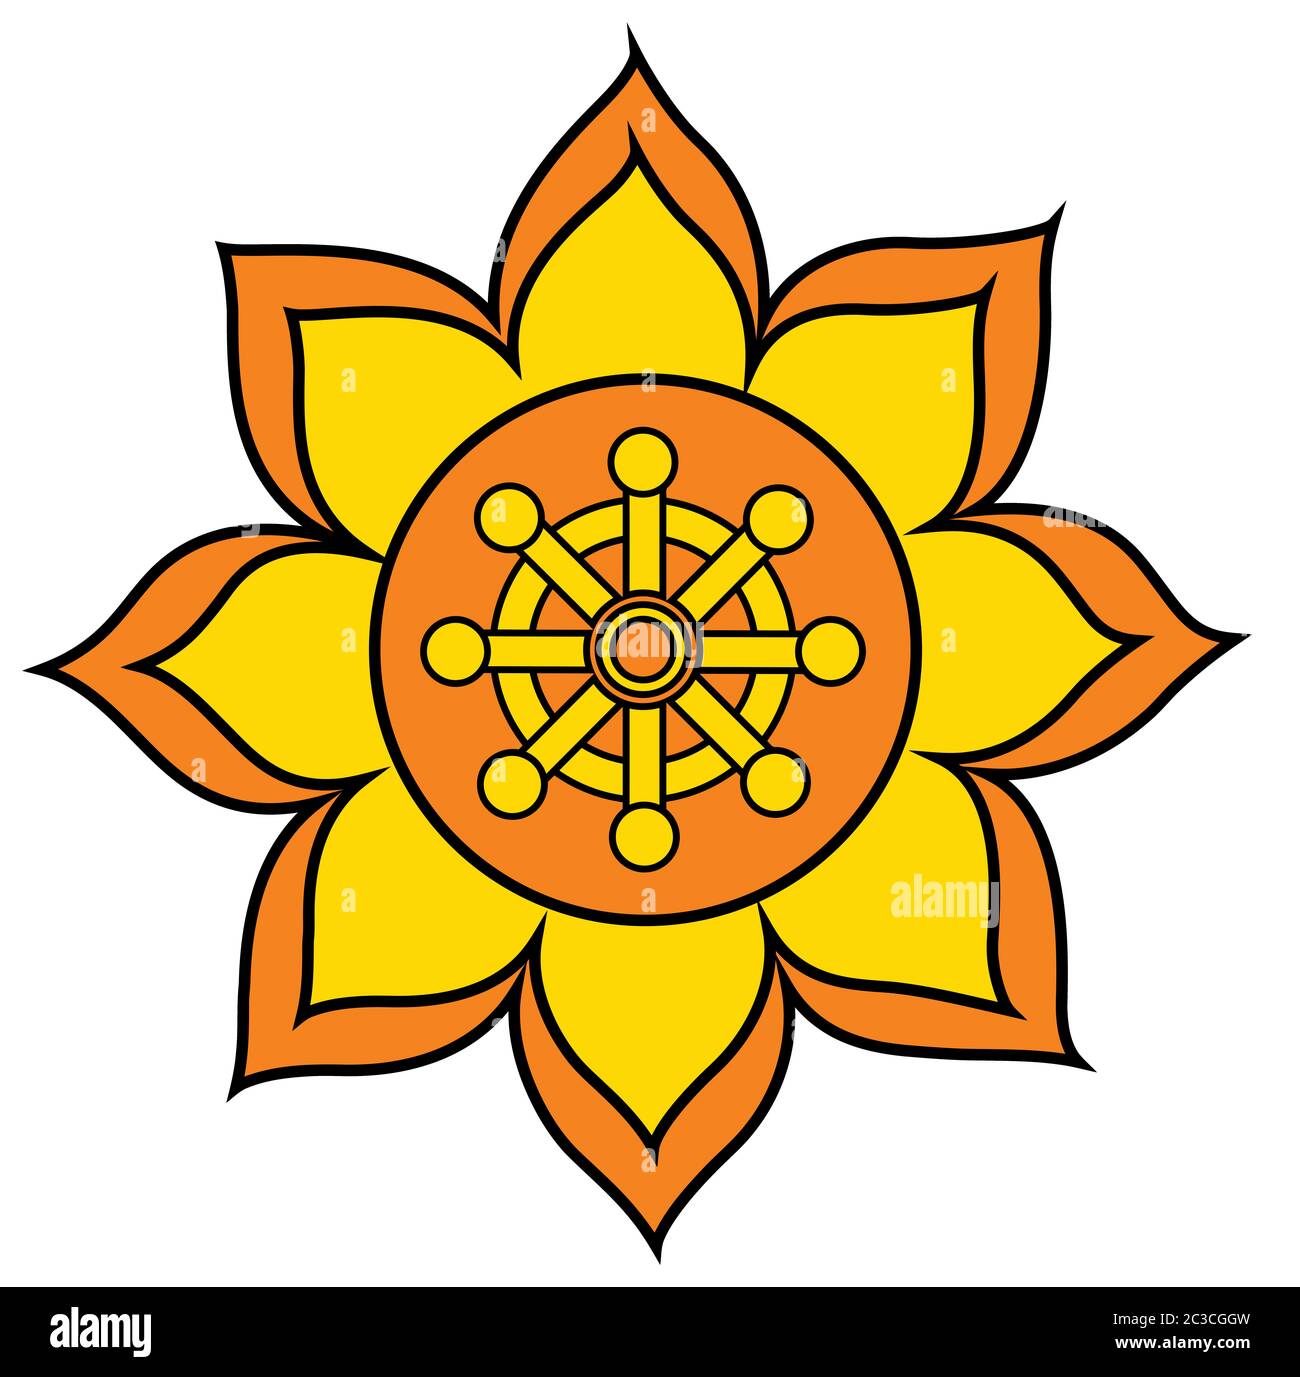 chakra buddhism wheel of dharma yellow illustration flower Stock Photo